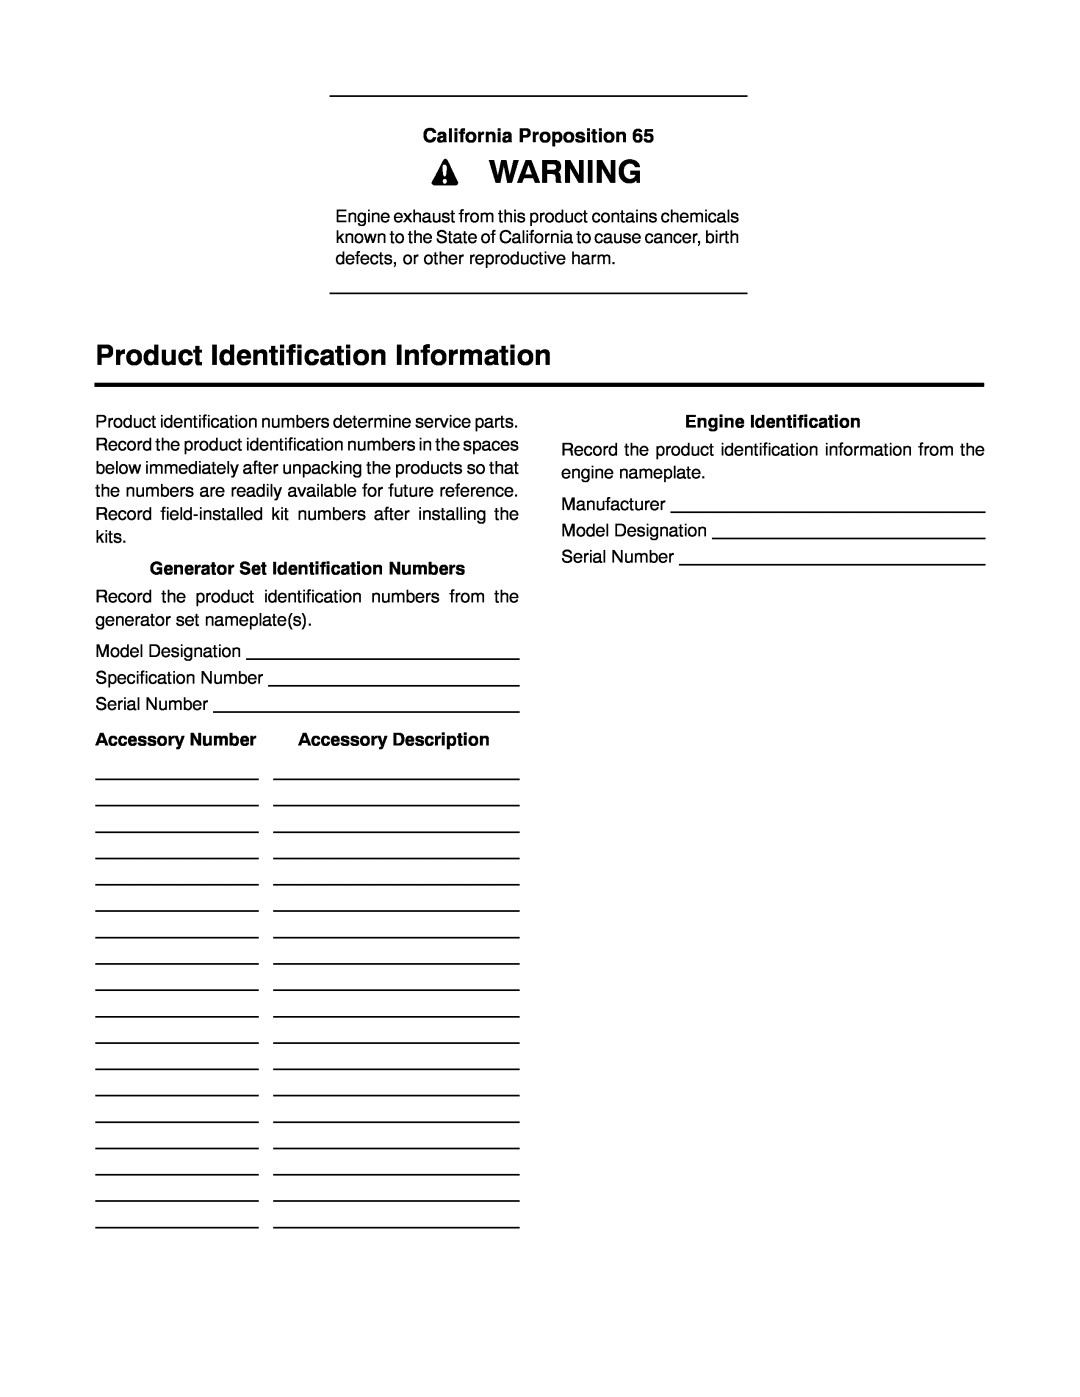 Kohler 20--2800 kW manual Product Identification Information, California Proposition 